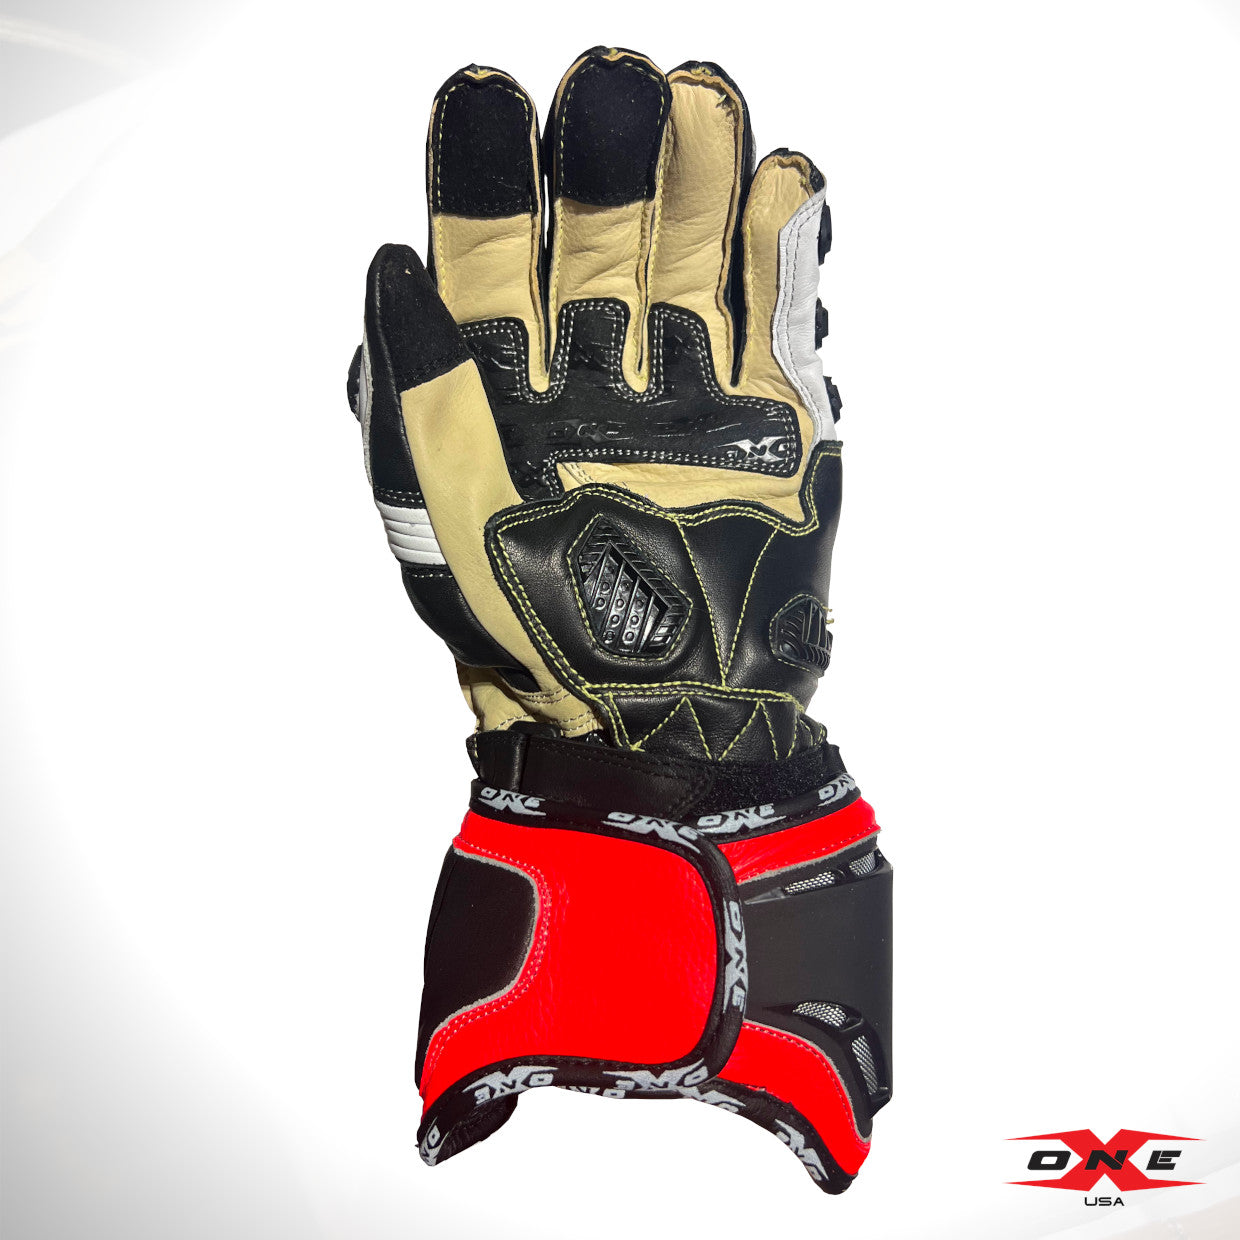 OneX USA Pro Race Gloves - Fluor Red